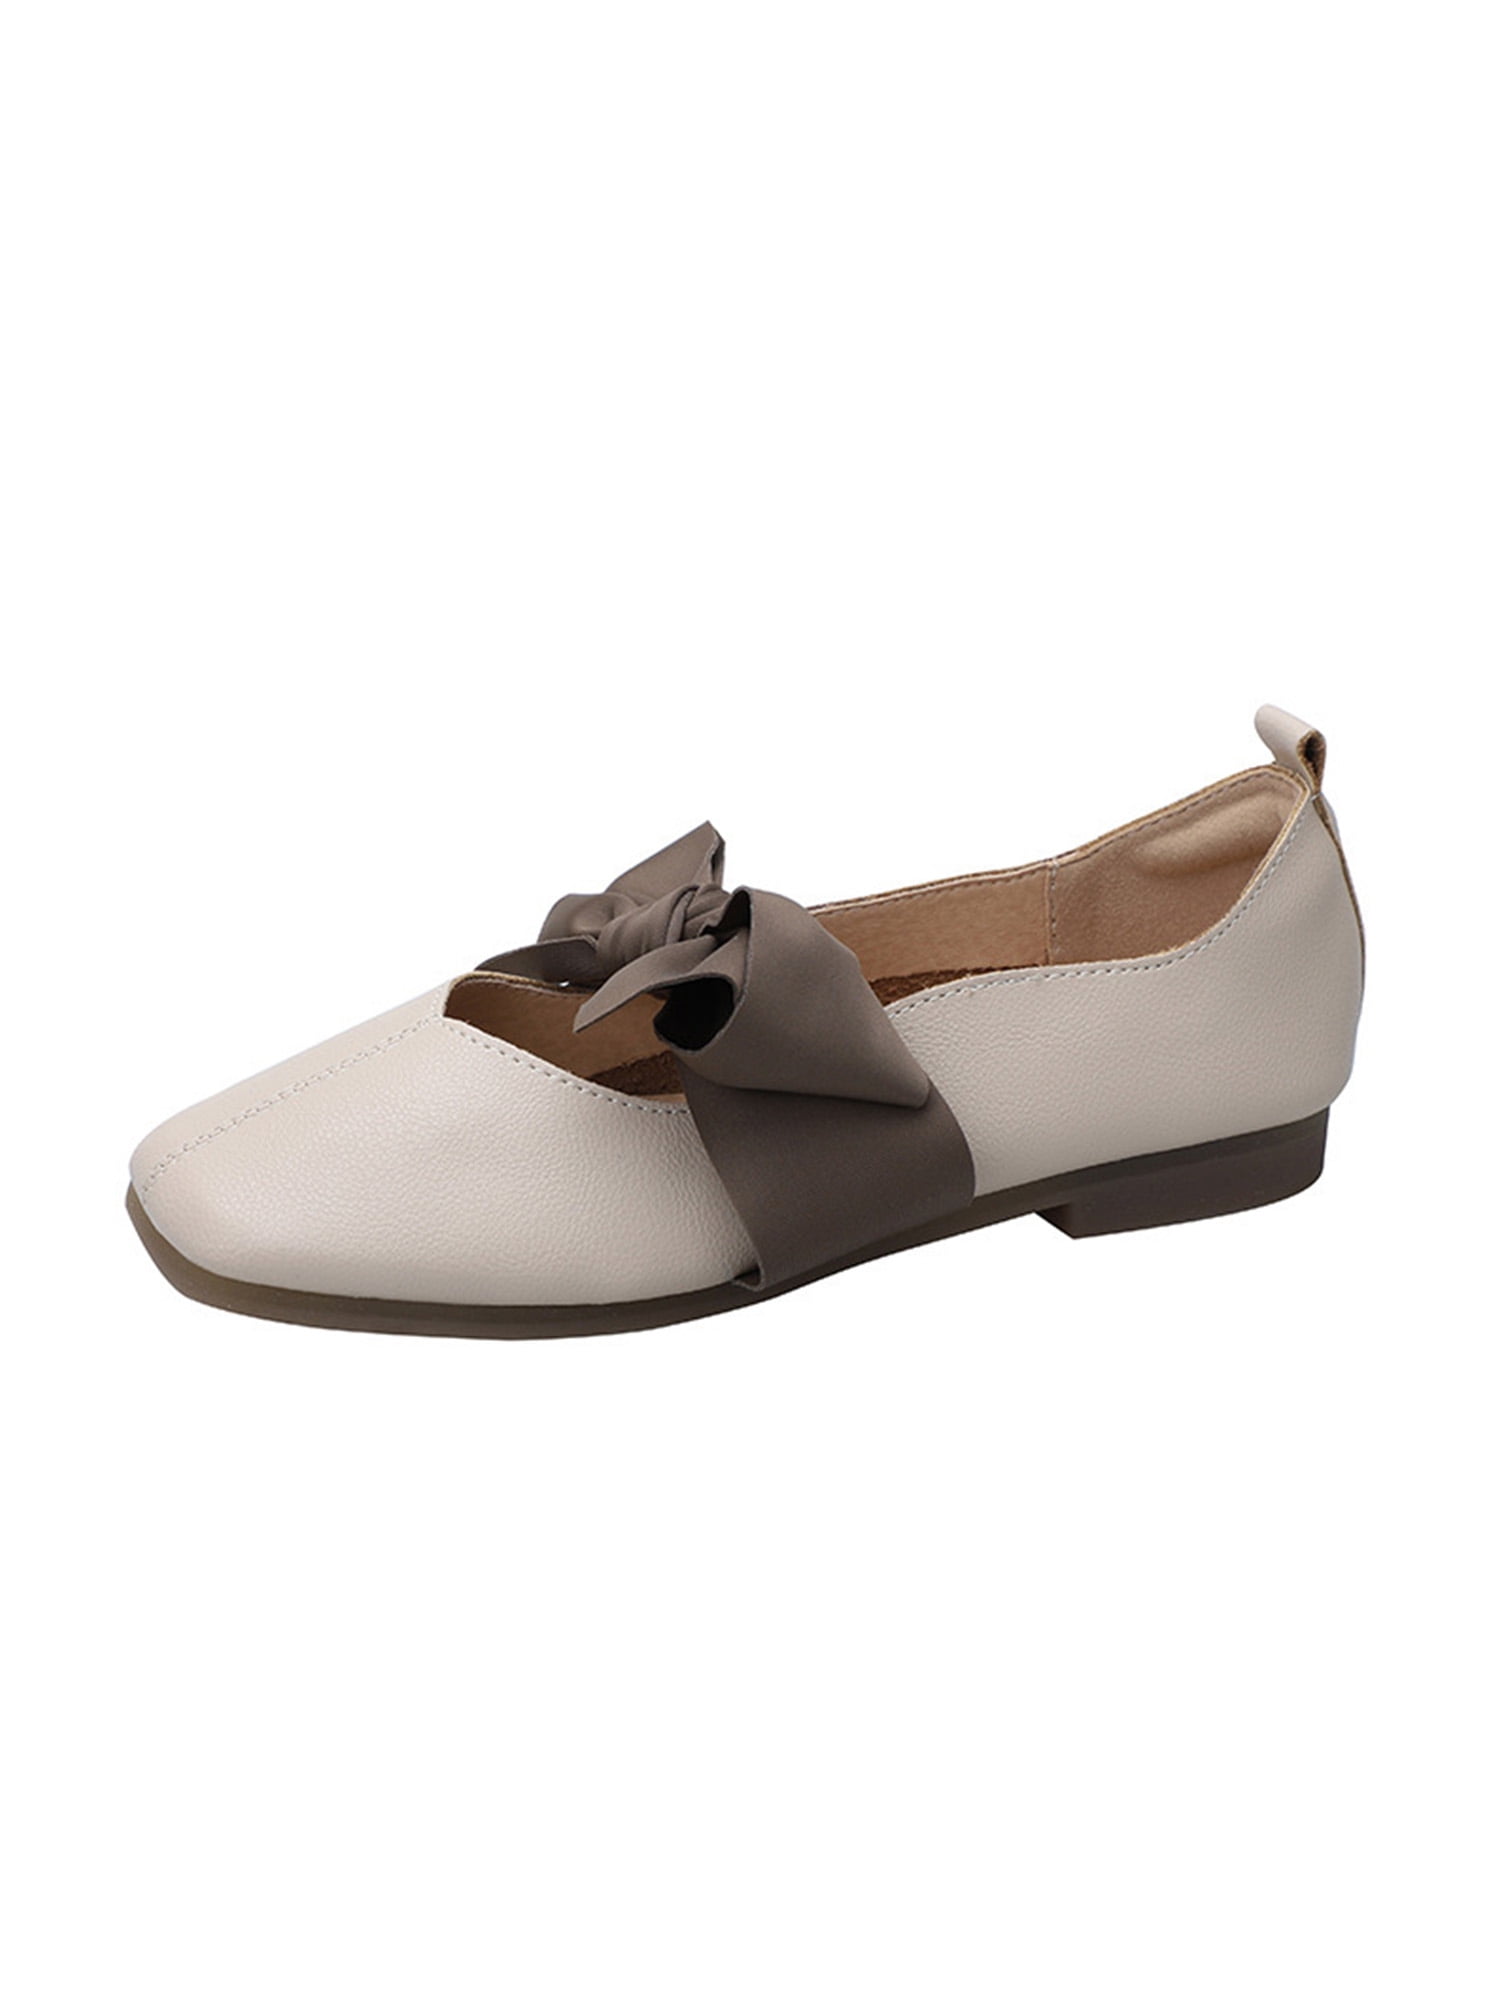 Womens Comfortable Ballet Flat Square Toe Slip On Flat Shoes US Size 7-9.5 